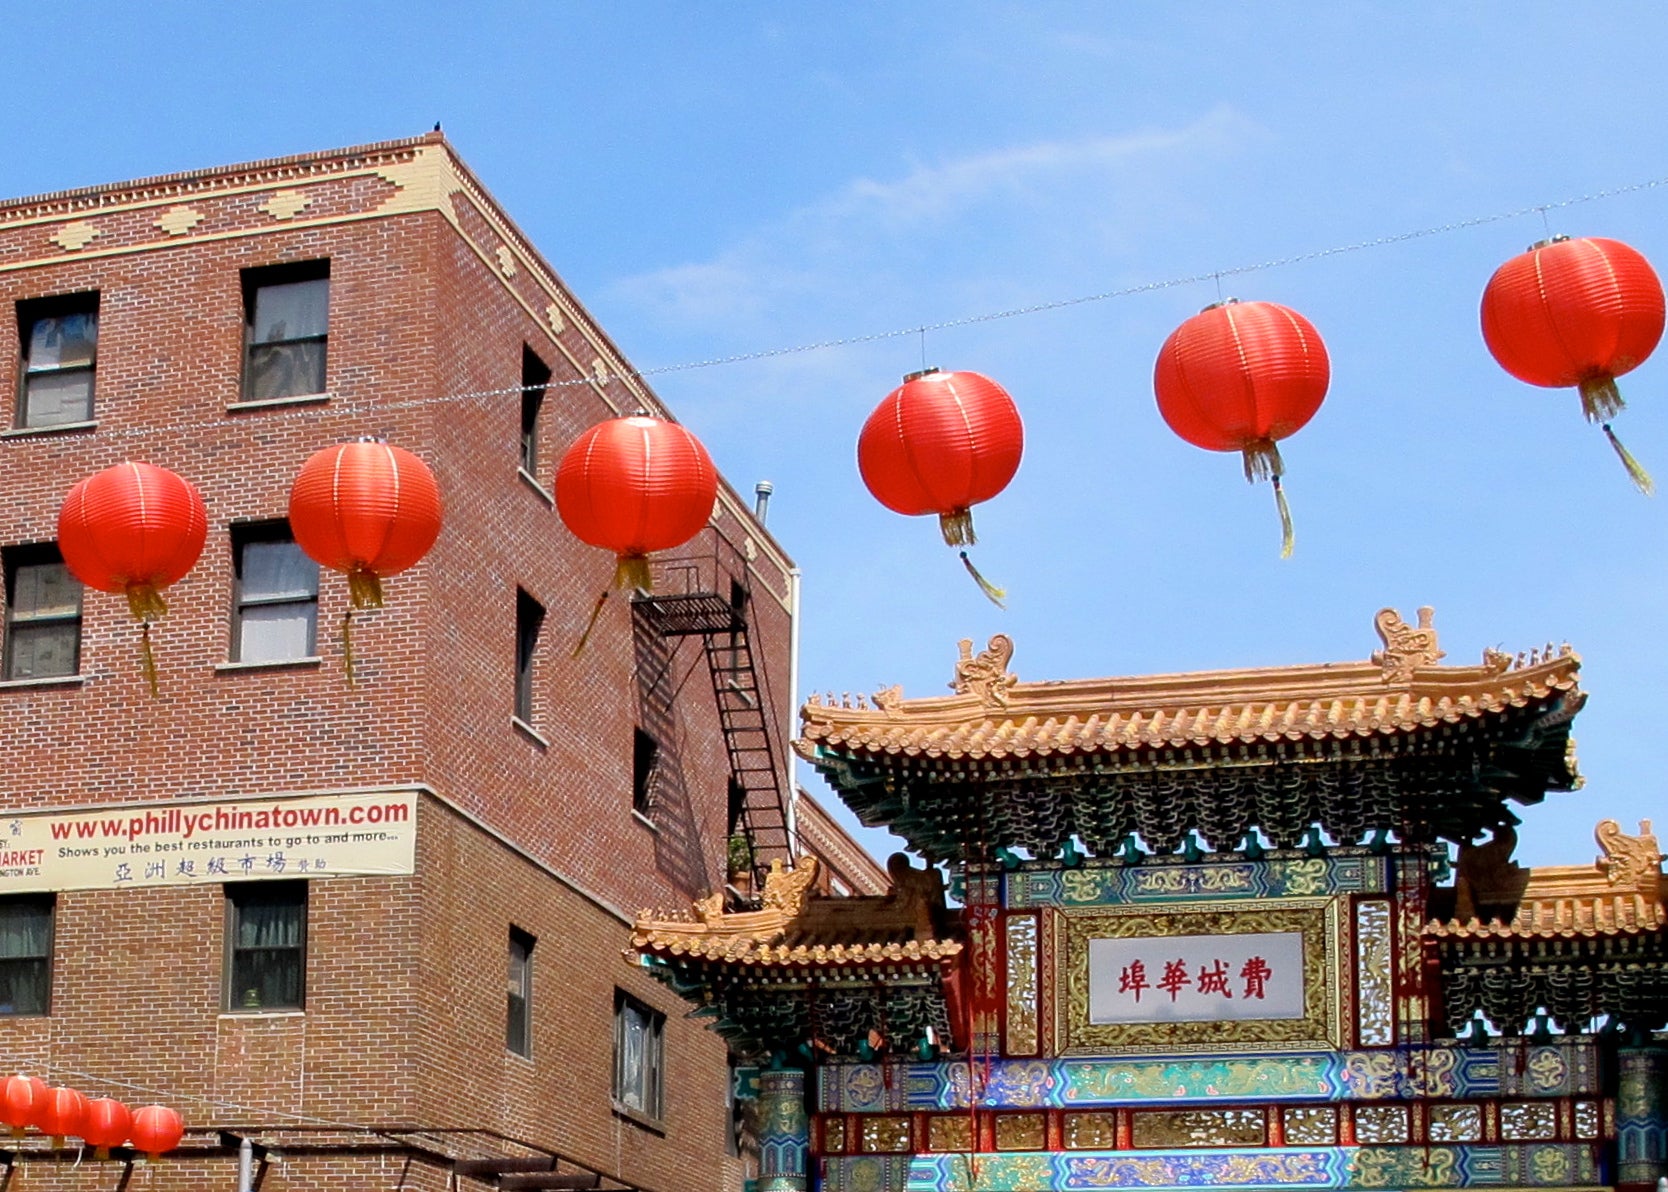 Chinatown Lanterns and Gate